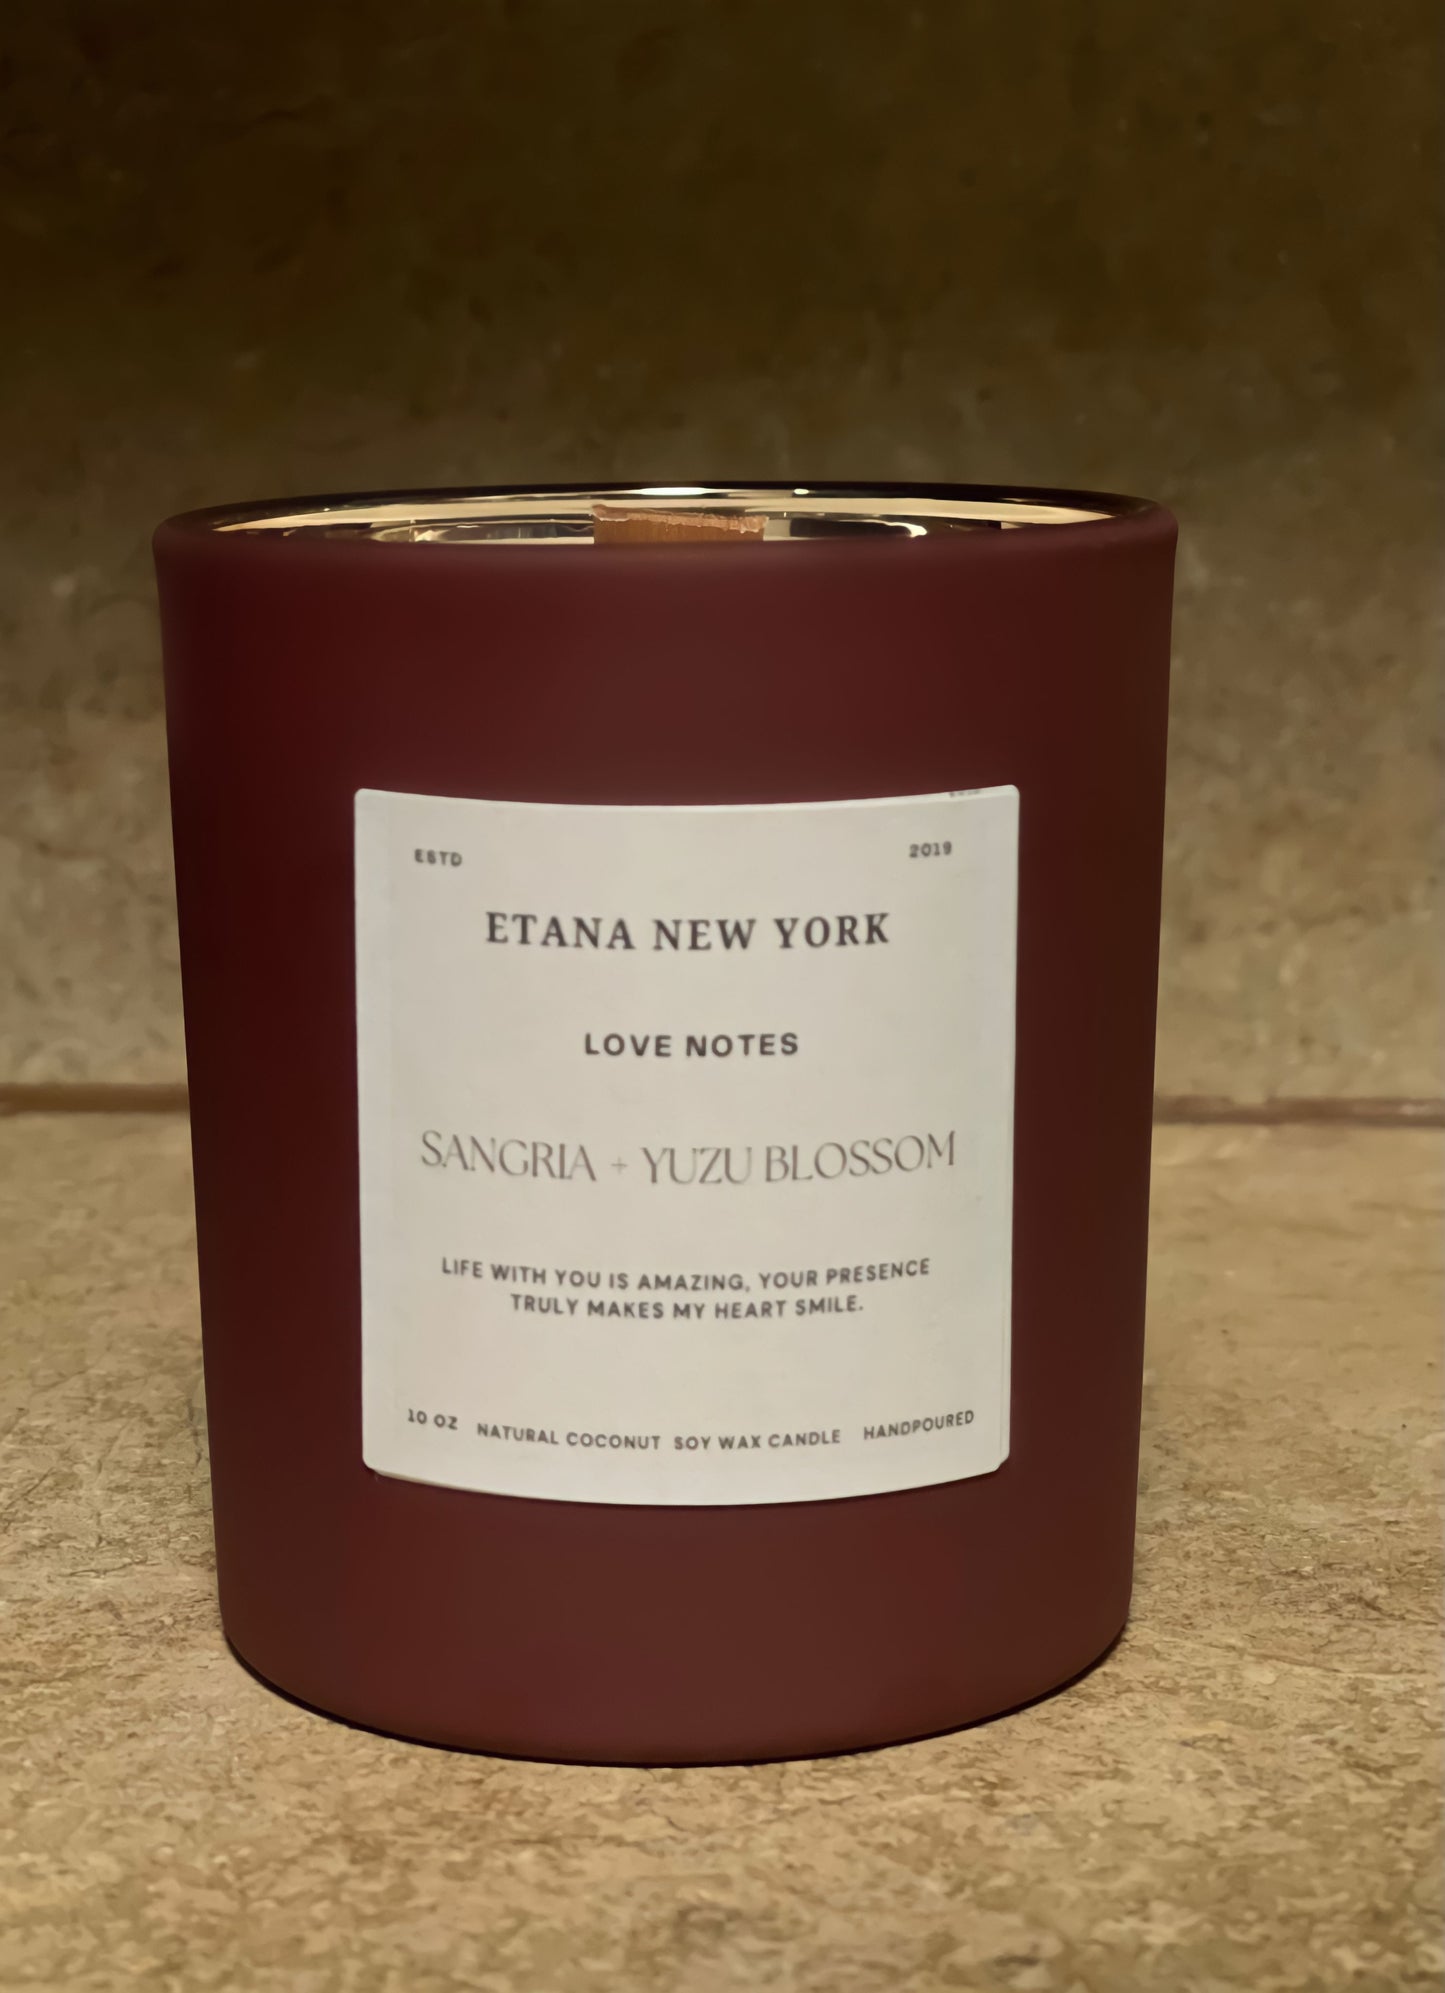 Sangria + Yuzu Blossom 10 oz. Wooden Wick Candle